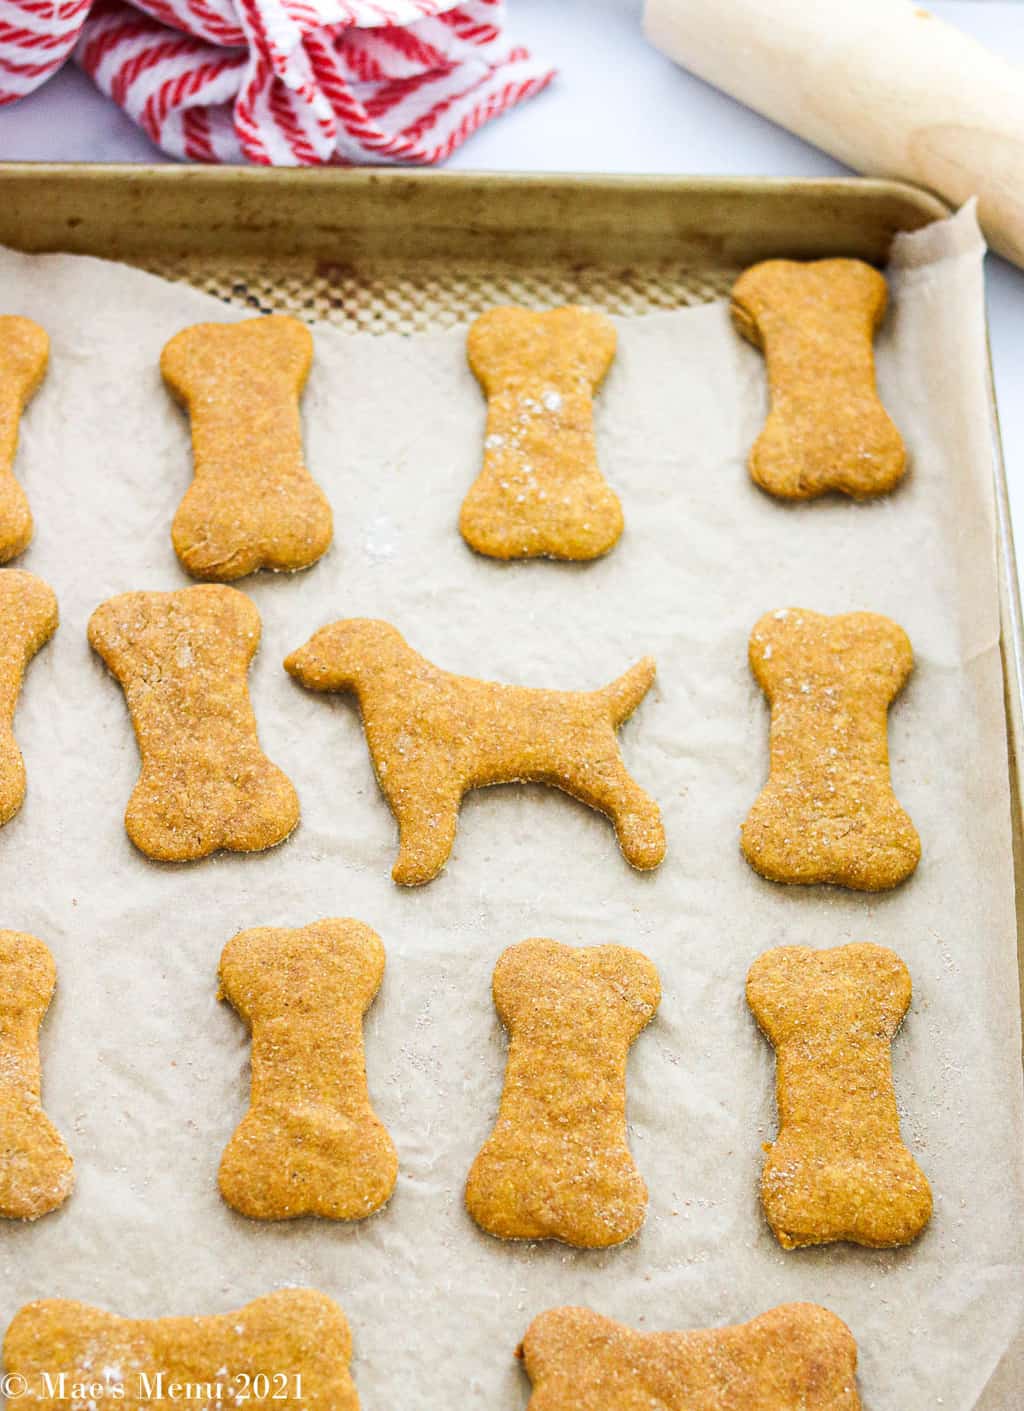 Baked dog treats on a baking pan